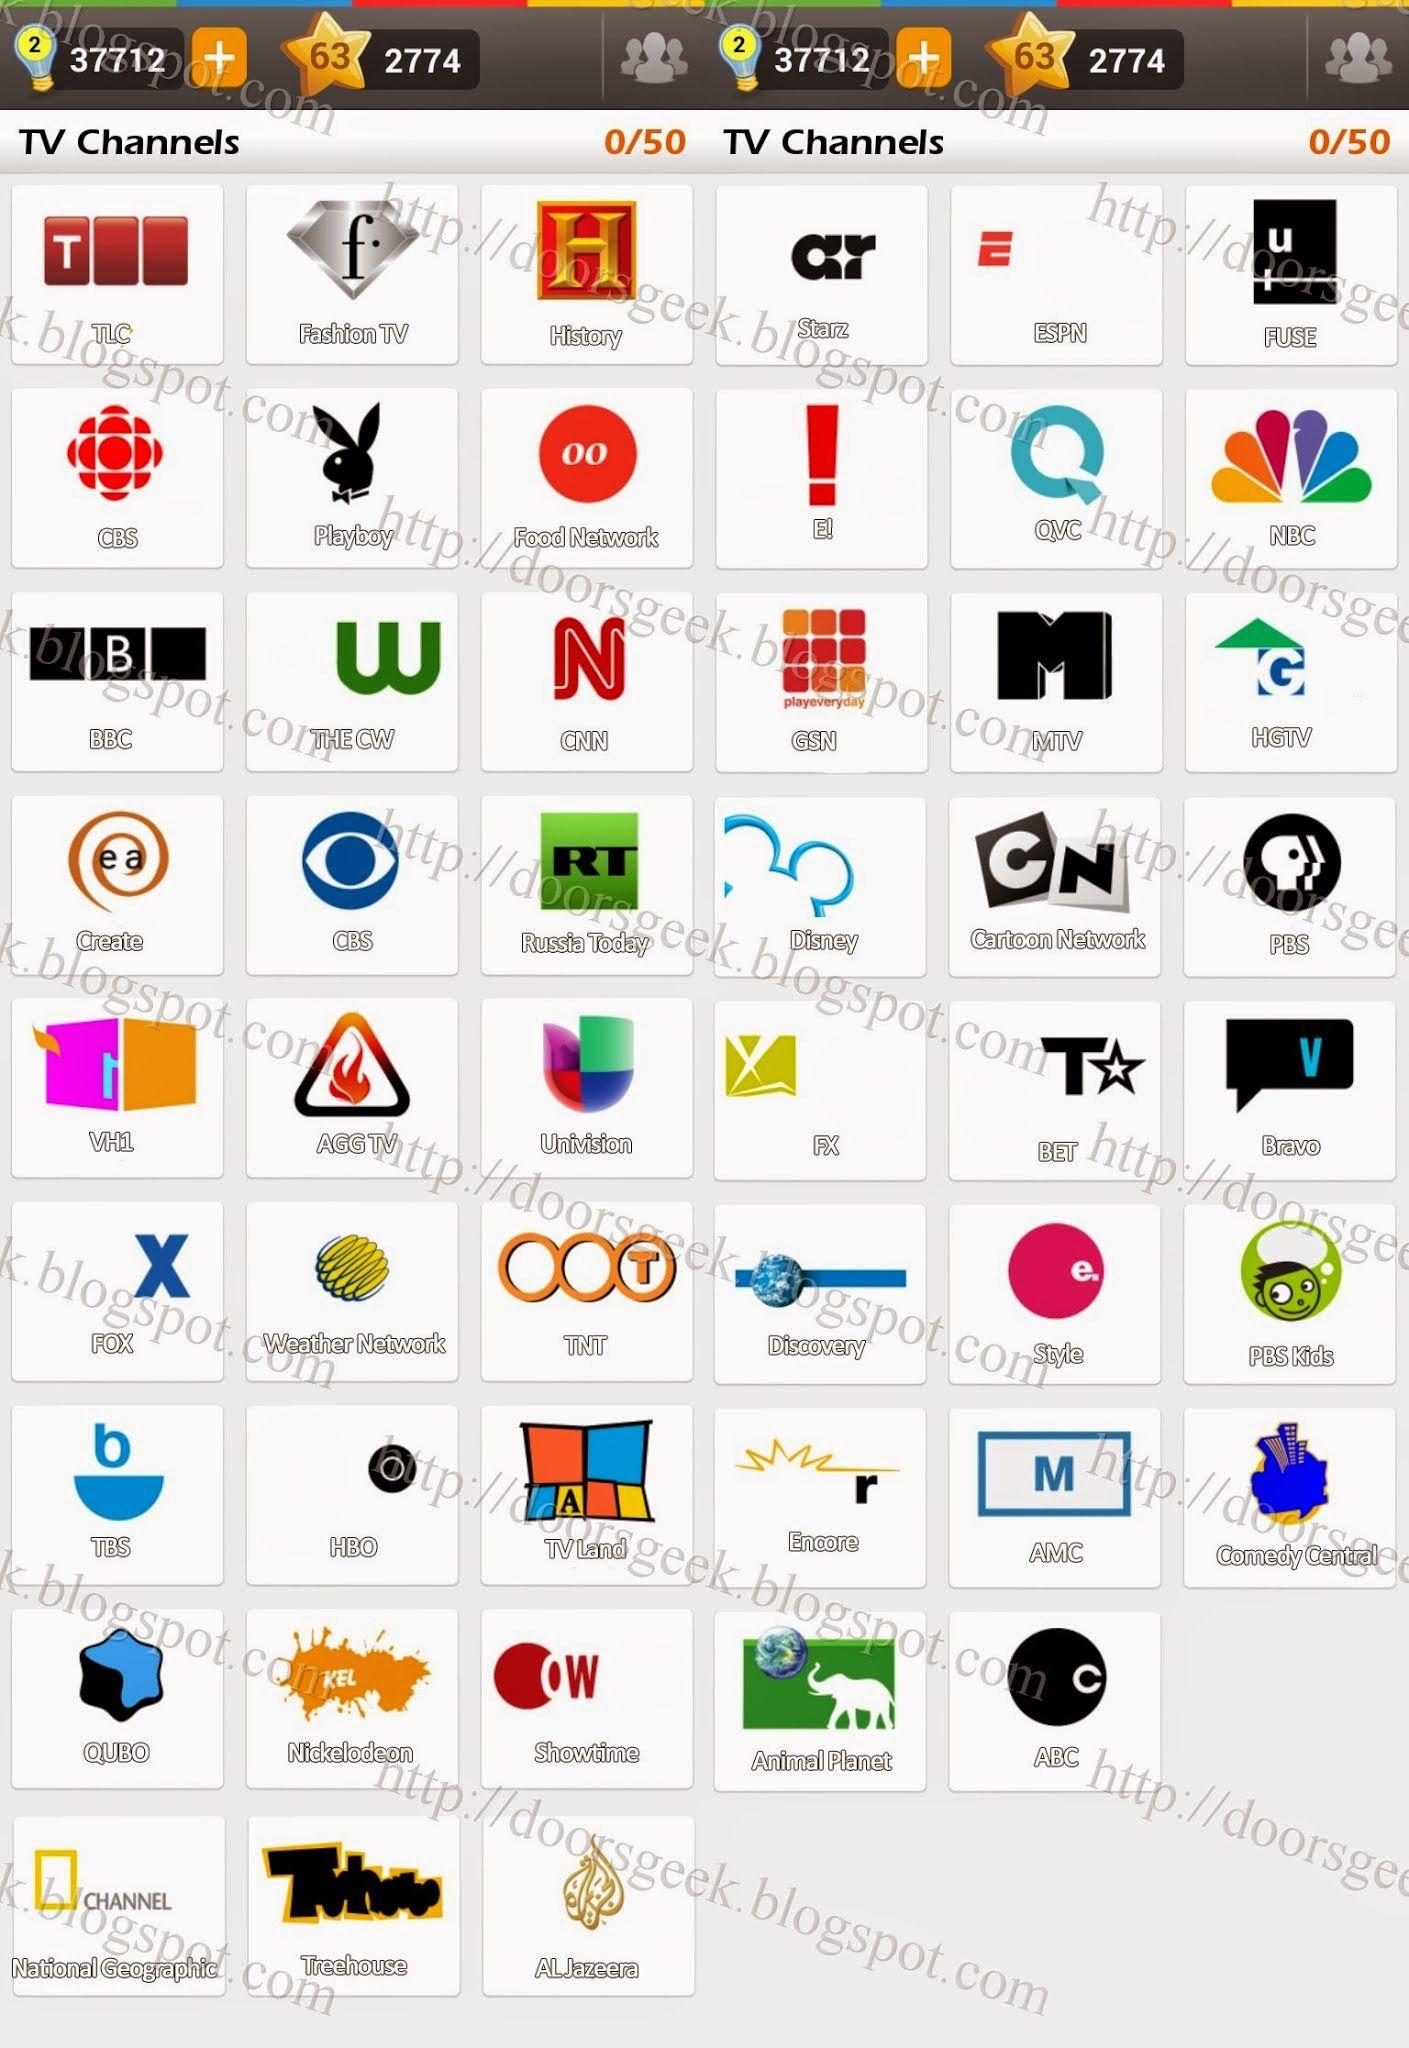 TV Channel Logo - Logo Game: Guess the Brand [Bonus] TV Channels Doors Geek